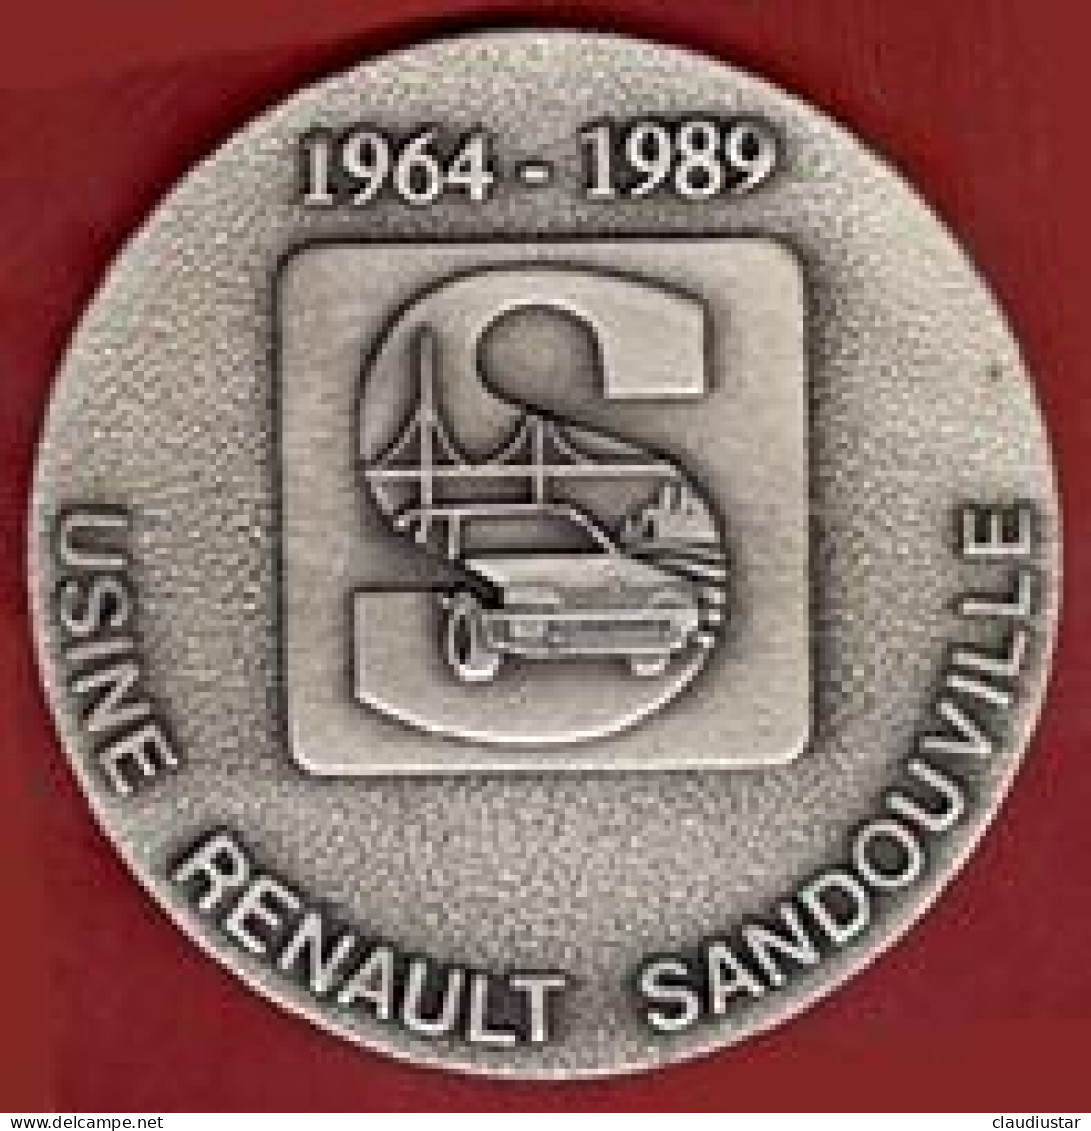 ** MEDAILLE  USINE  RENAULT  SANDOUVILLE  1964 - 1989 ** - Automobilismo - F1